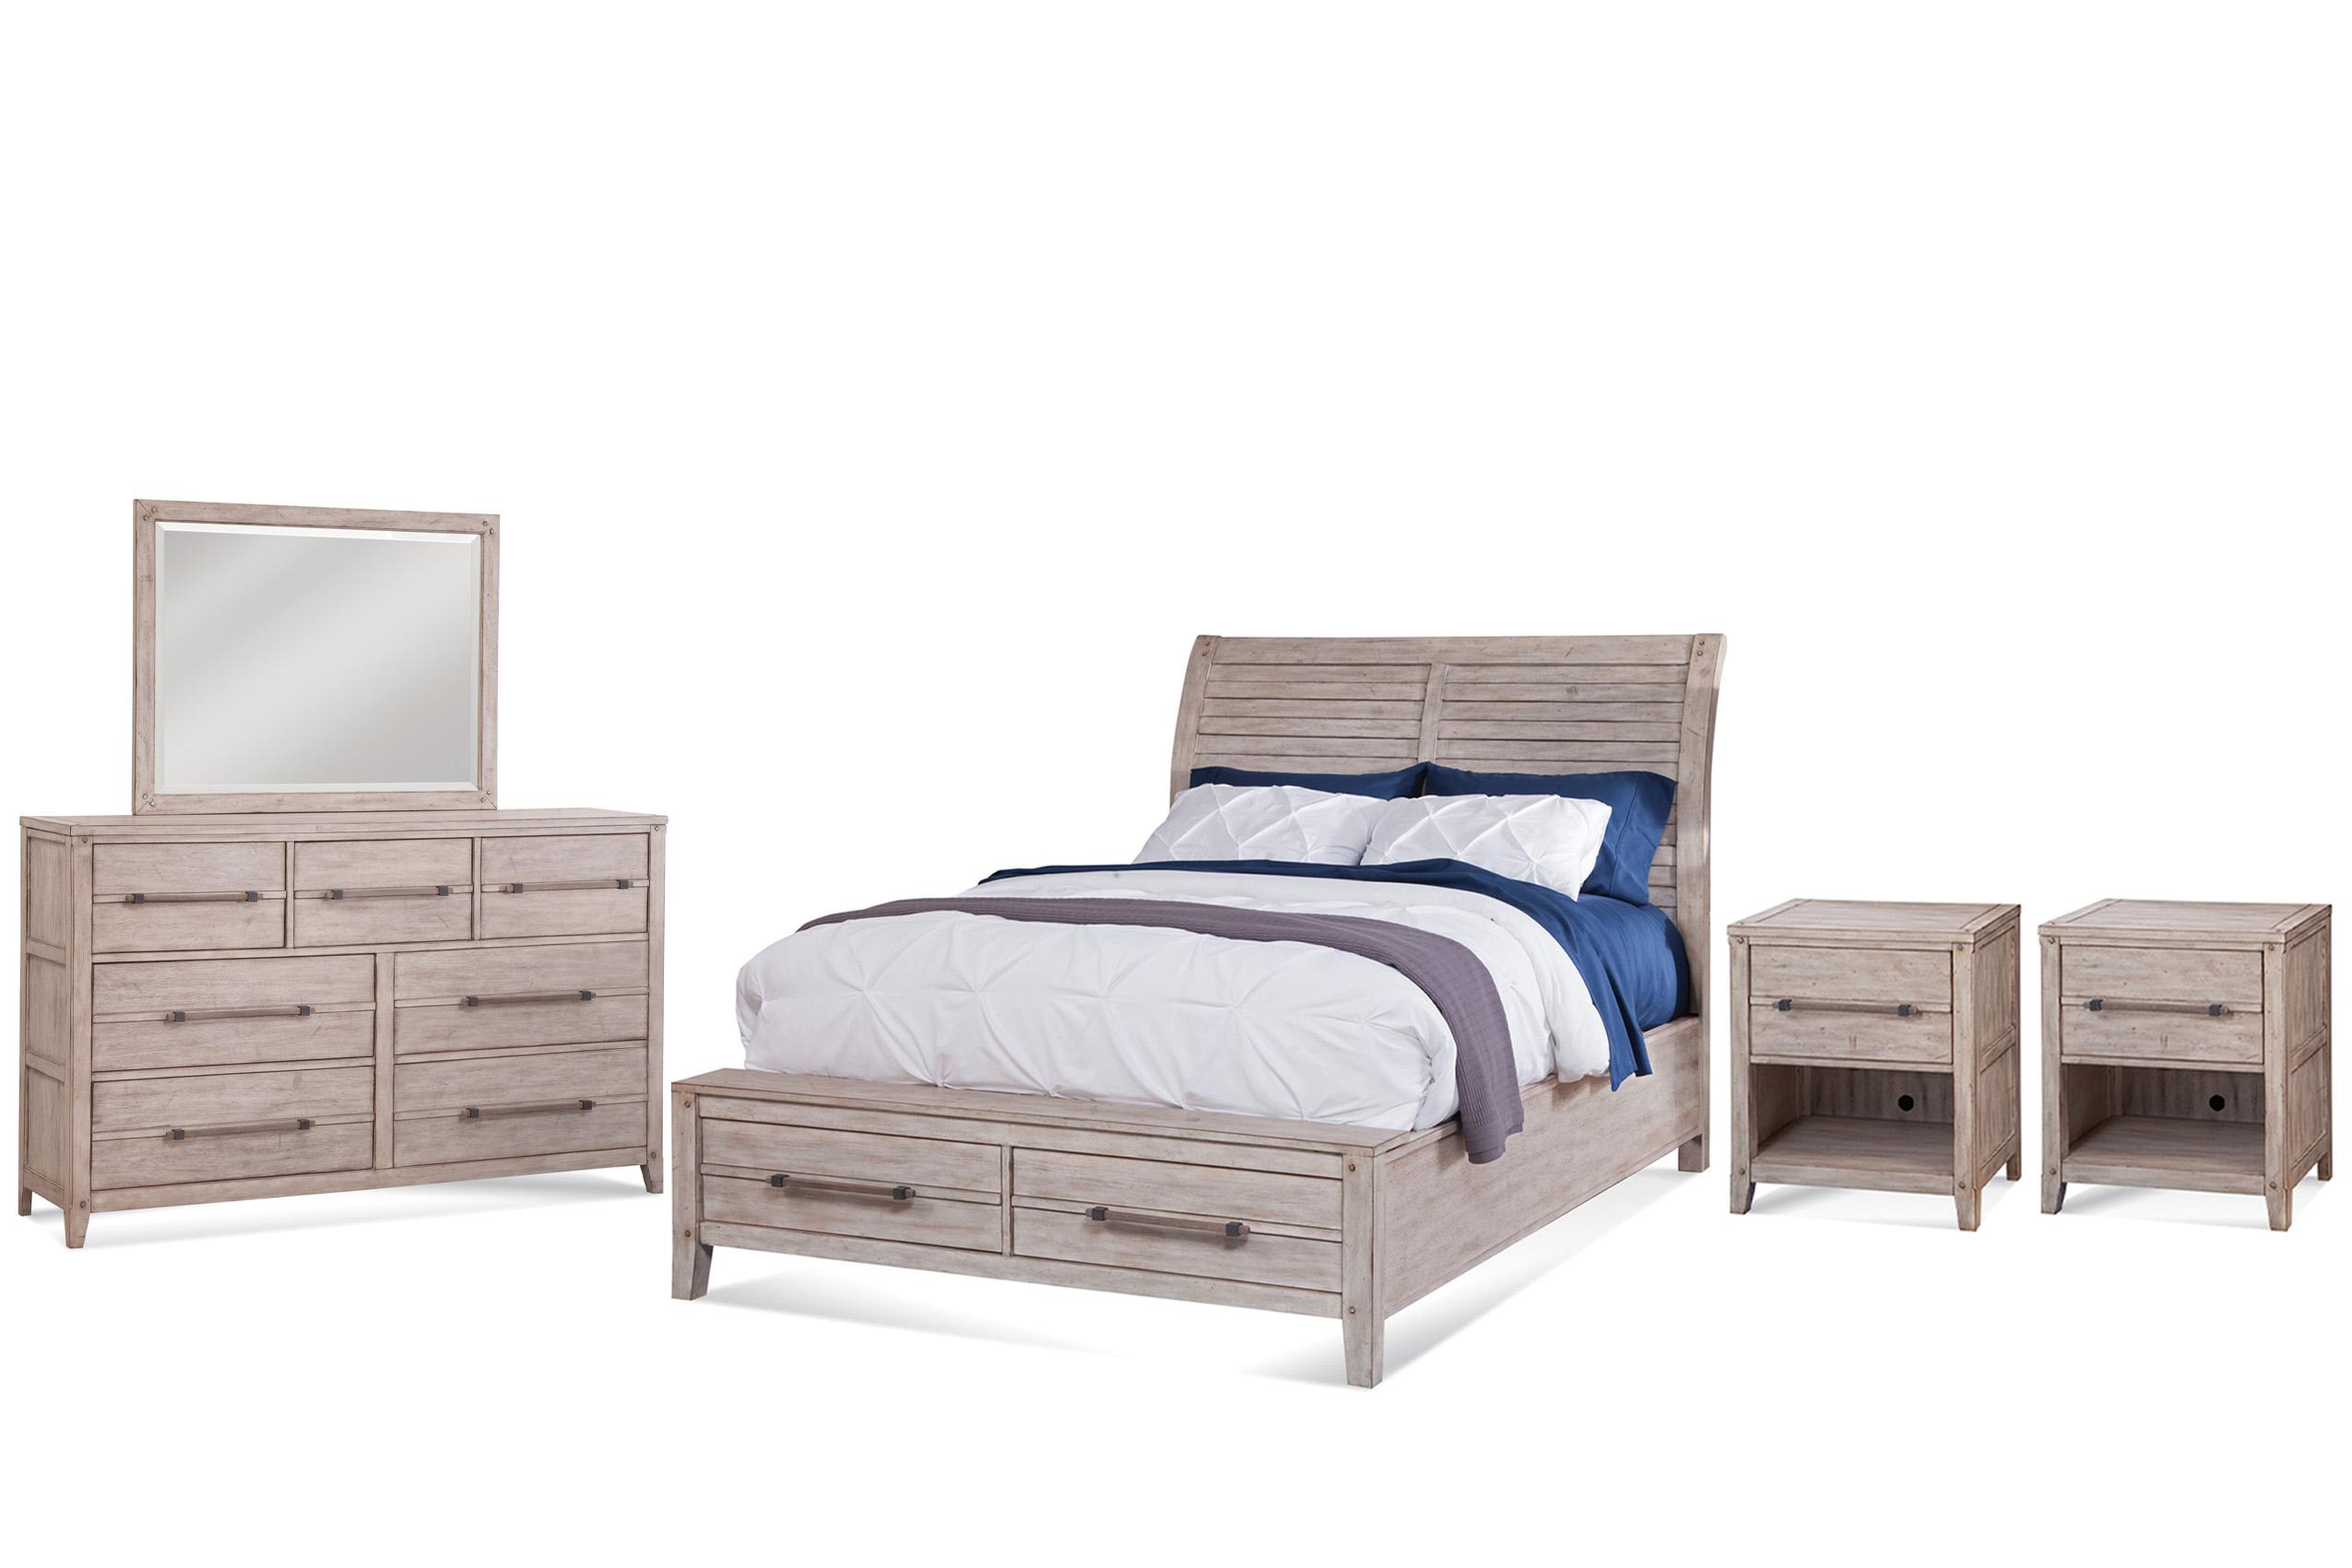 Classic, Traditional Sleigh Bedroom Set AURORA 2810-50PSB 2810-50PSB-2NDM-5PC in whitewash 